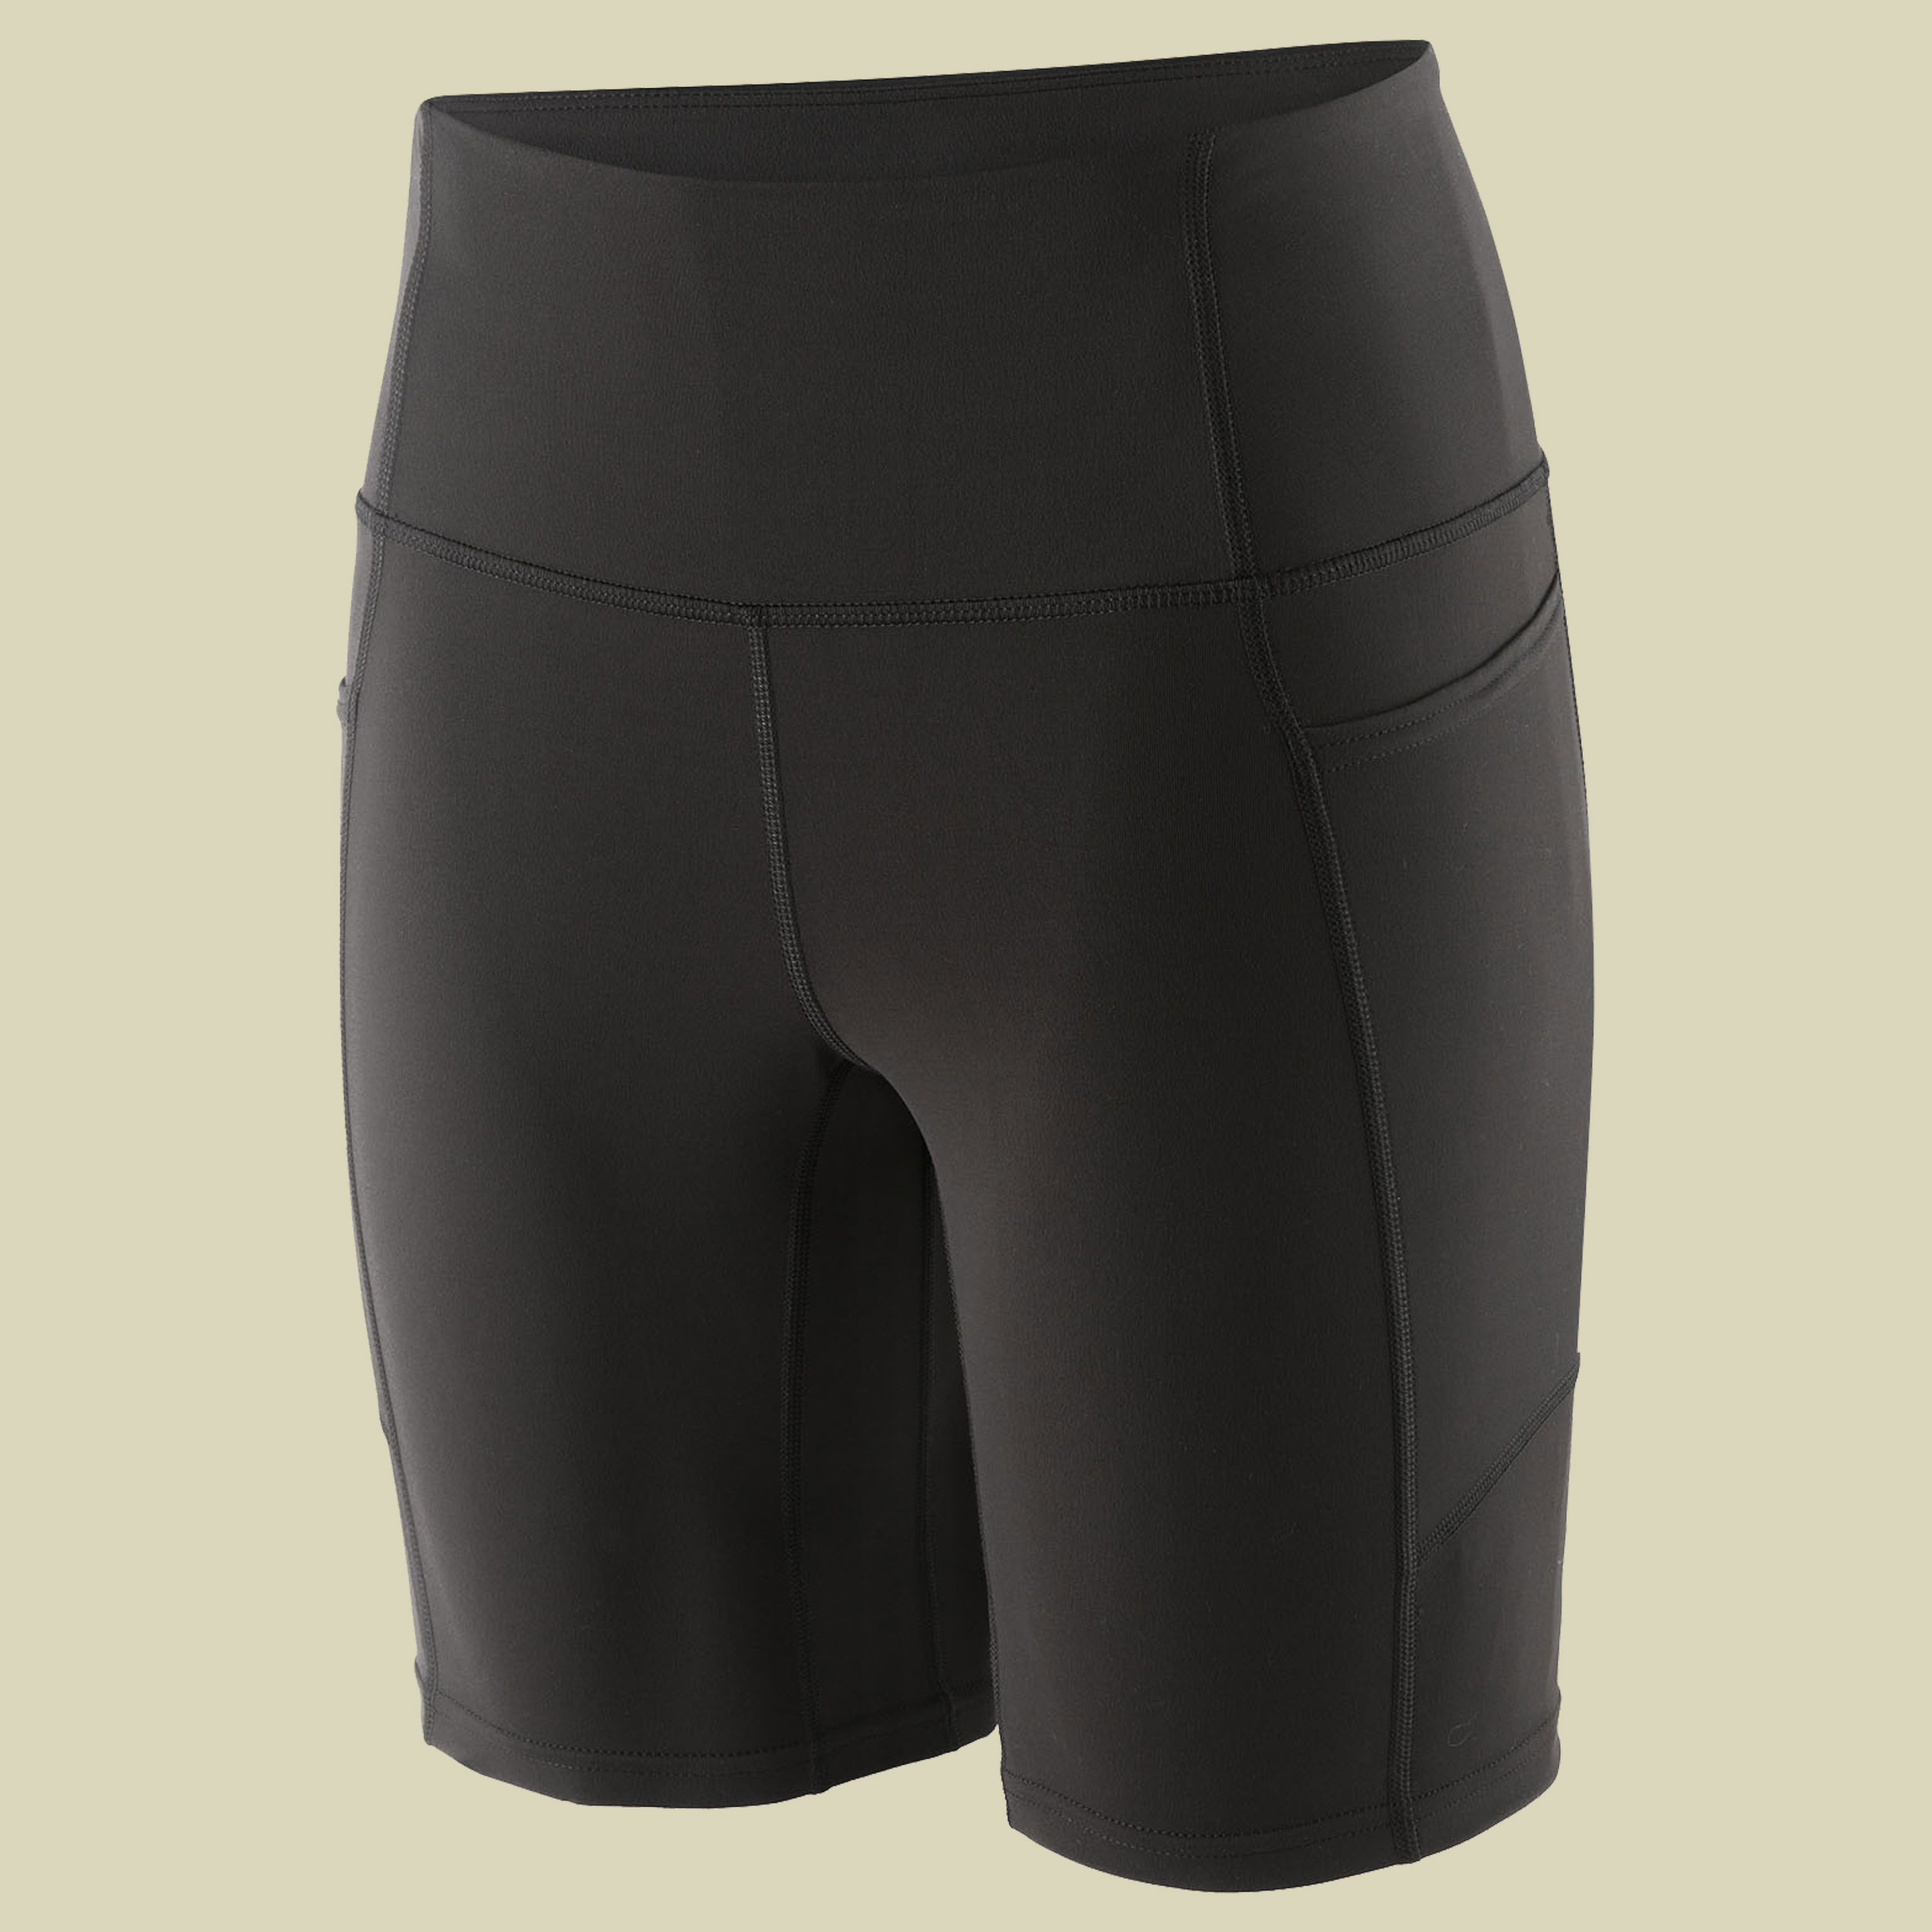 Maipo Shorts -8" Women S schwarz - black